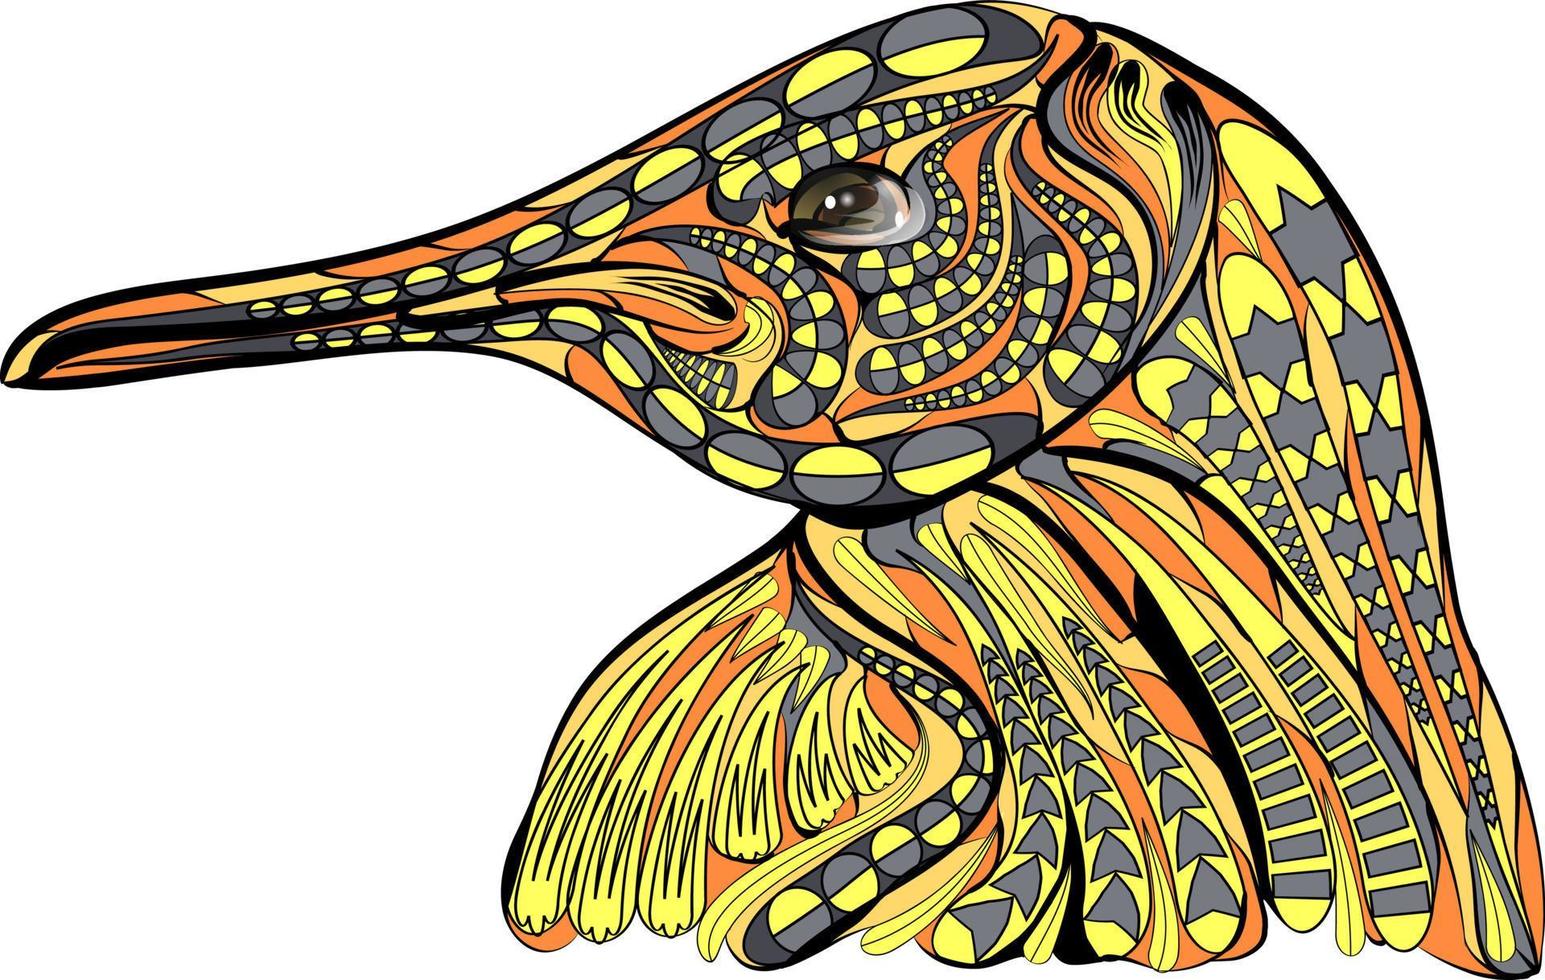 Pinguin Ethnic. Hand drawn decorative vector illustration. Color